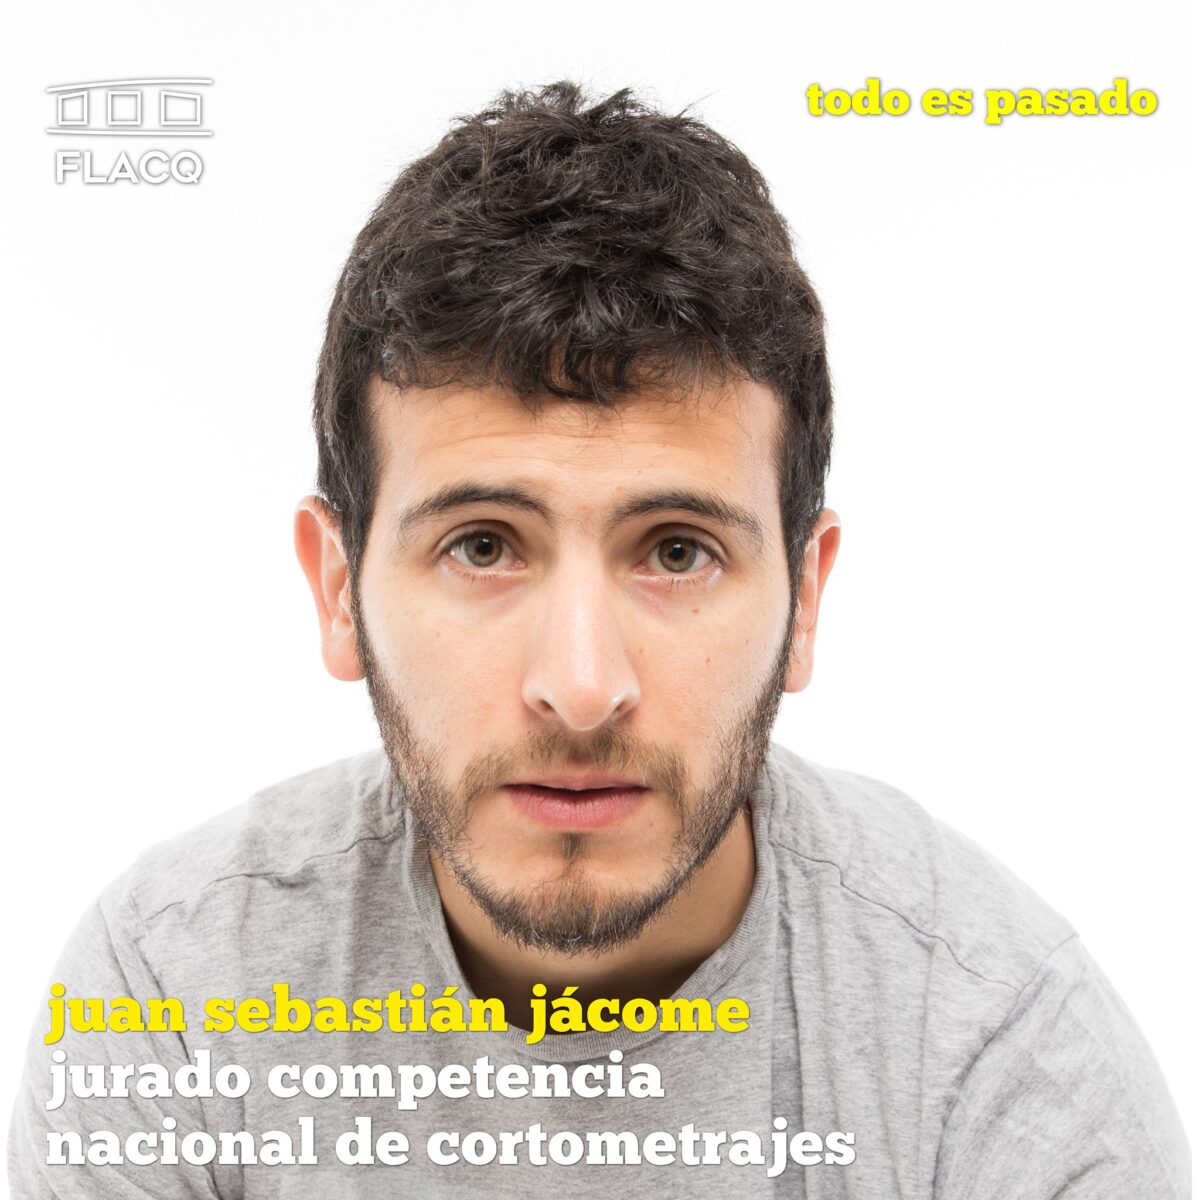 Juan Sebastián Jácome, jurado del concurso nacional de cortometrajes del FLACQ